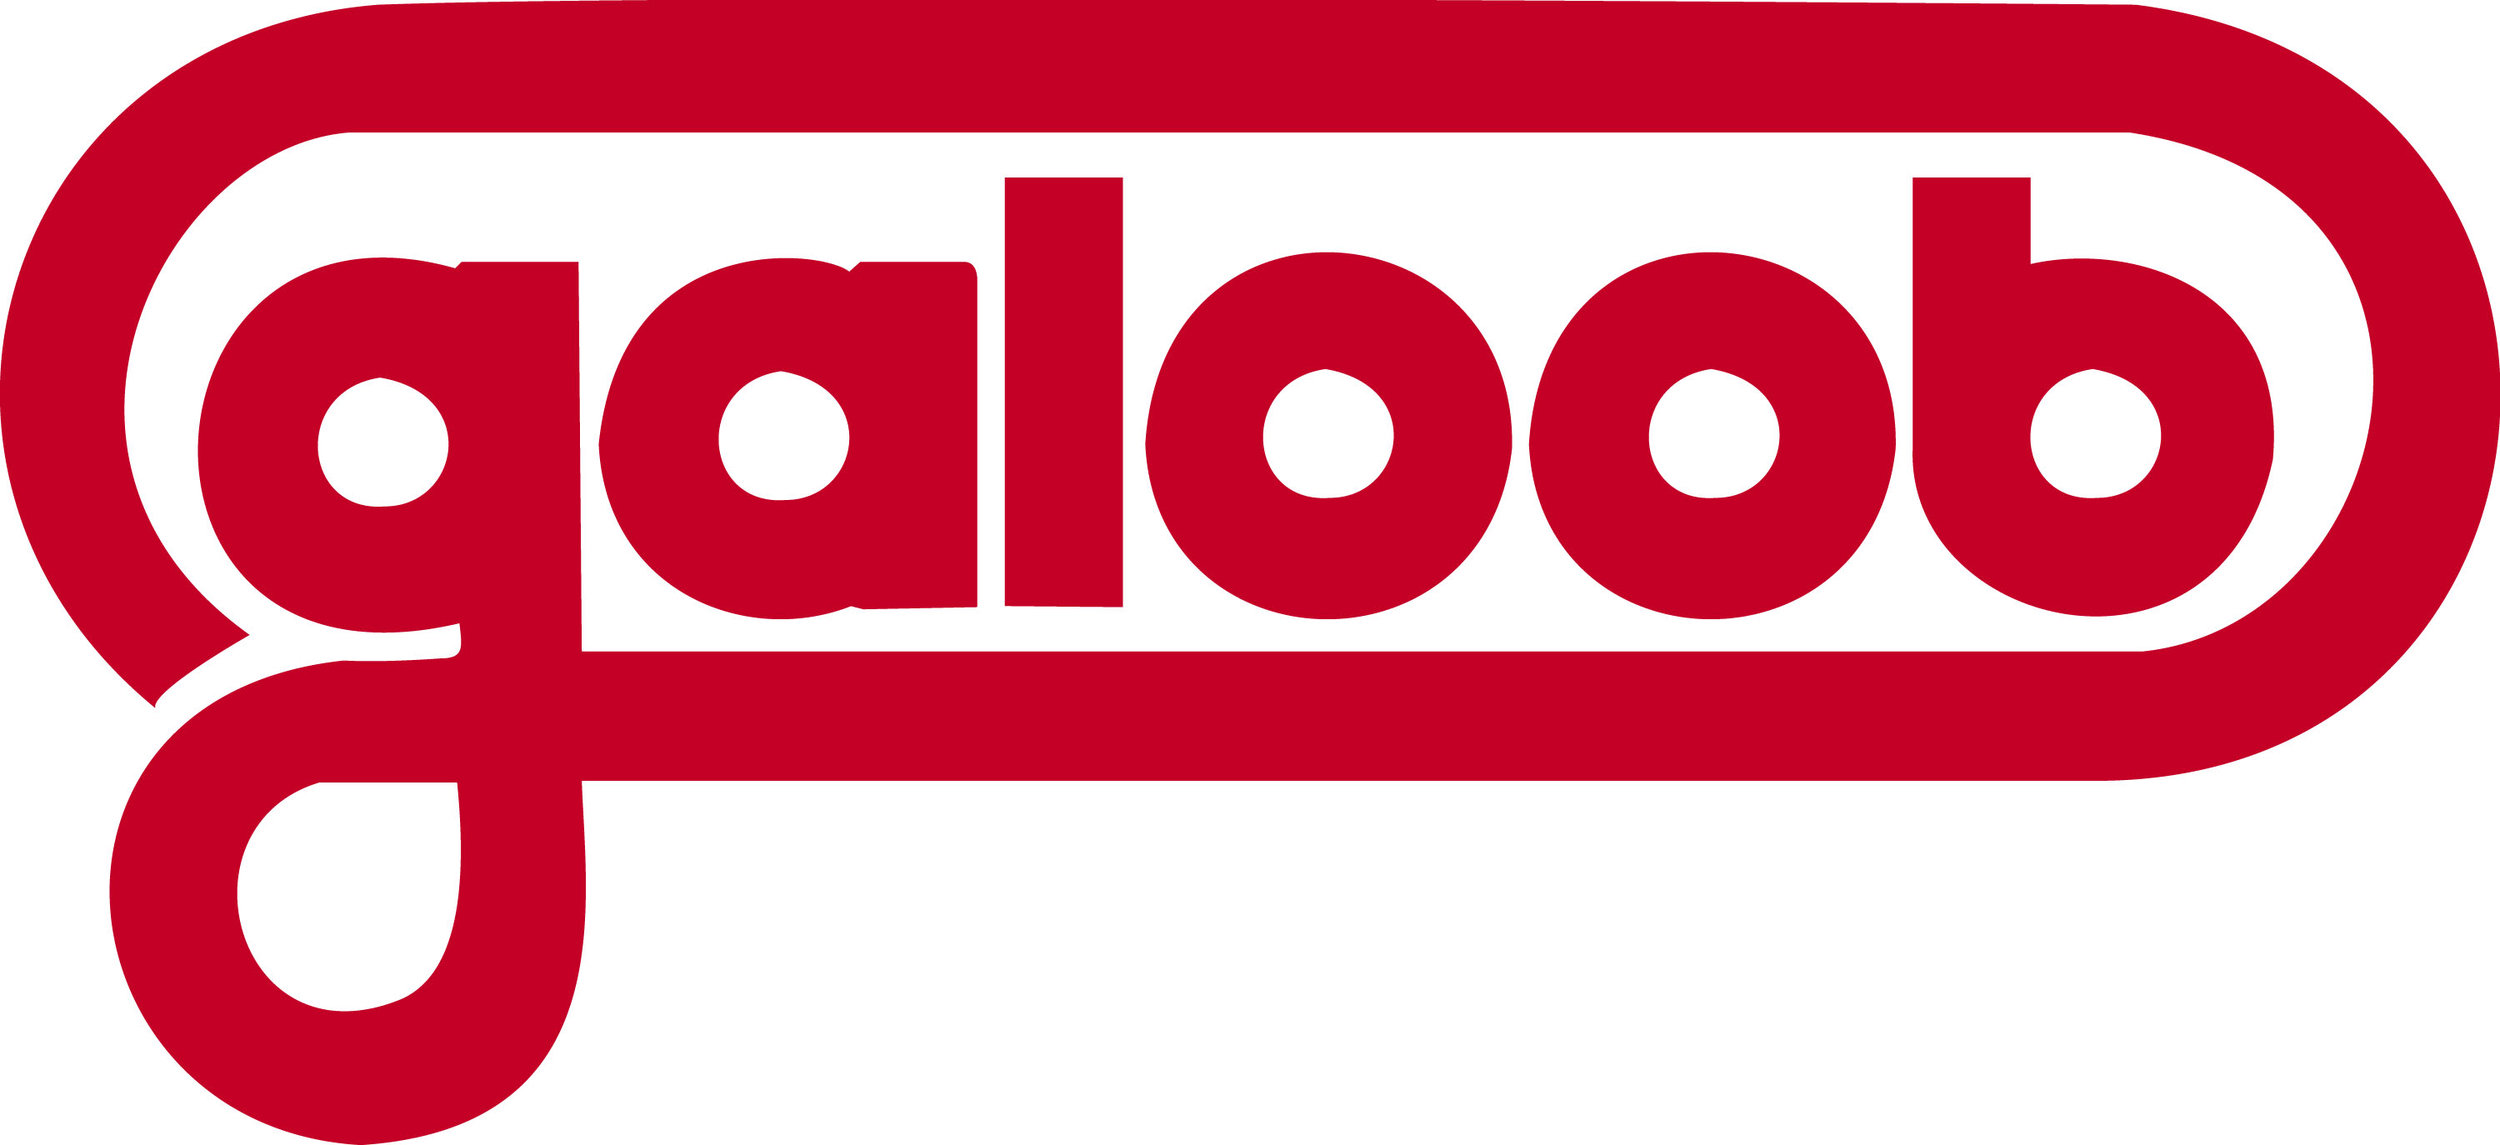 Galoob_logo.jpg